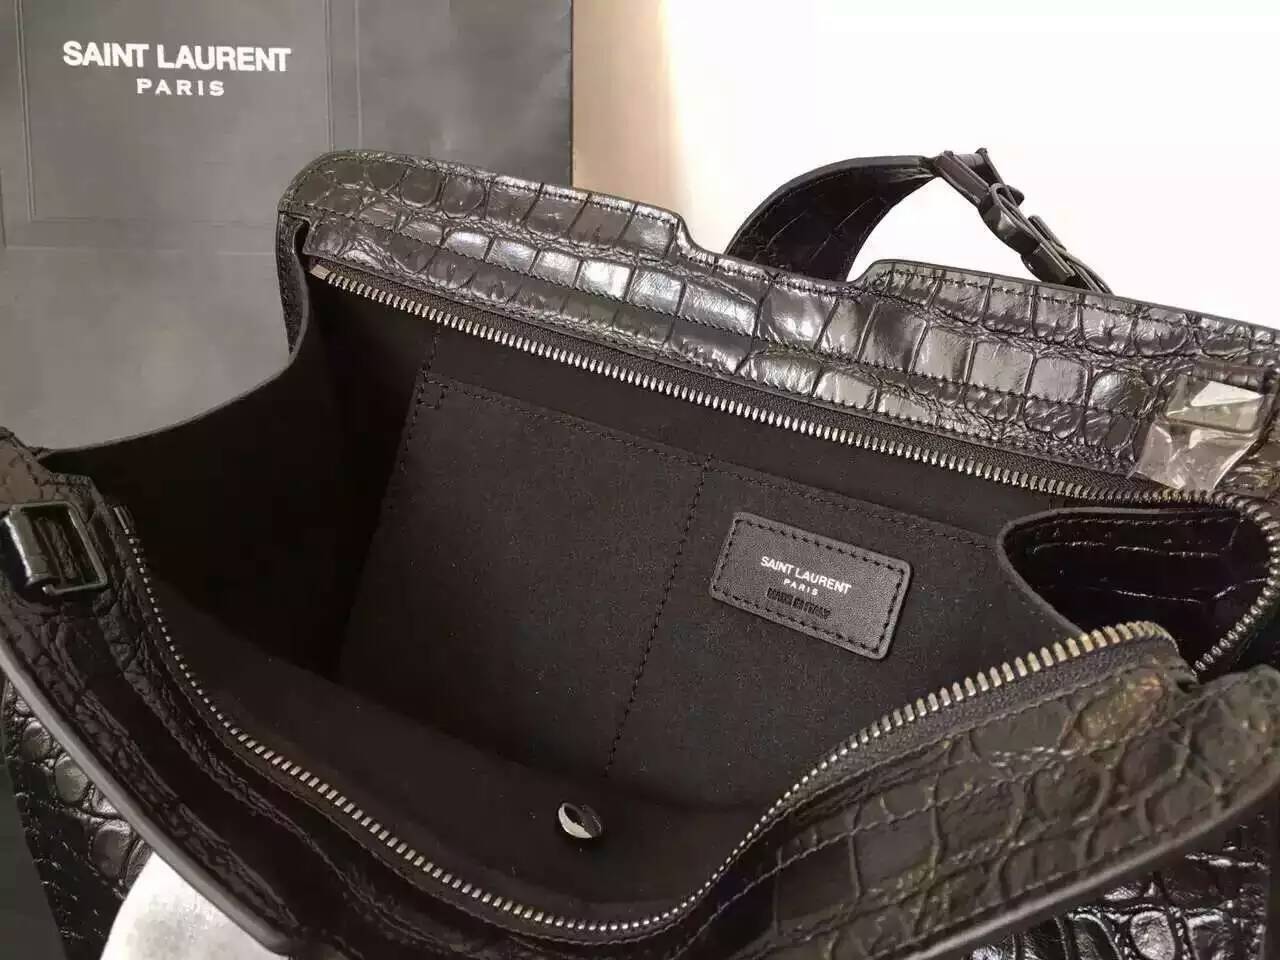 S/S 2016 New Saint Laurent Bag Cheap Sale-Saint Laurent Small Monogram Cabas Bag in Black Crocodile Embossed Leather - Click Image to Close